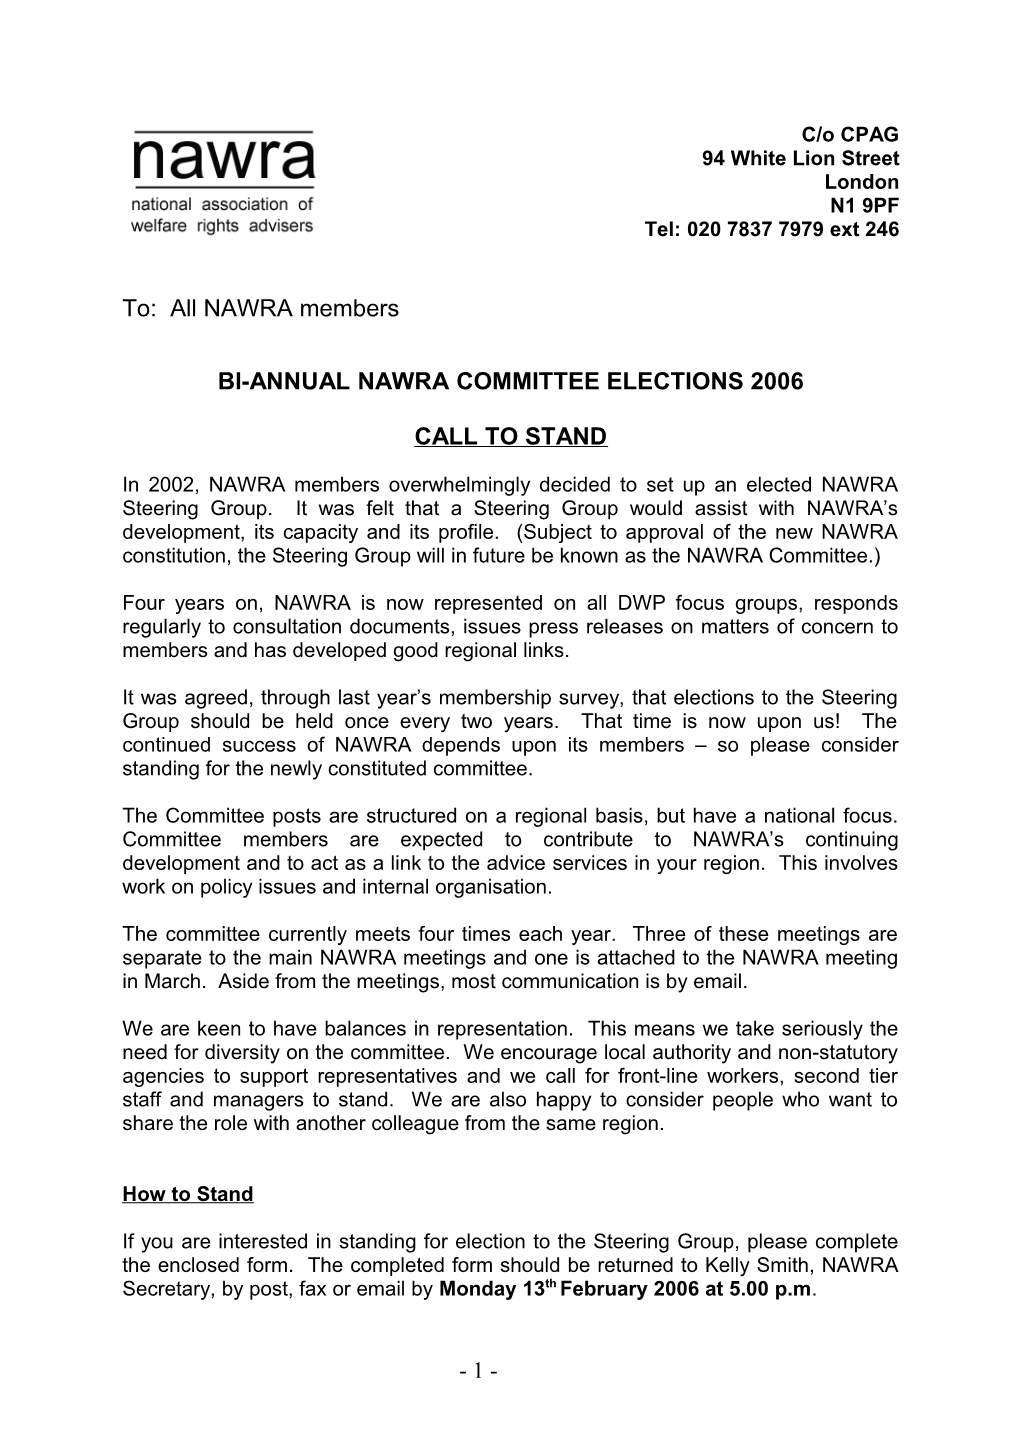 Bi-Annual Nawra Committee Elections 2006